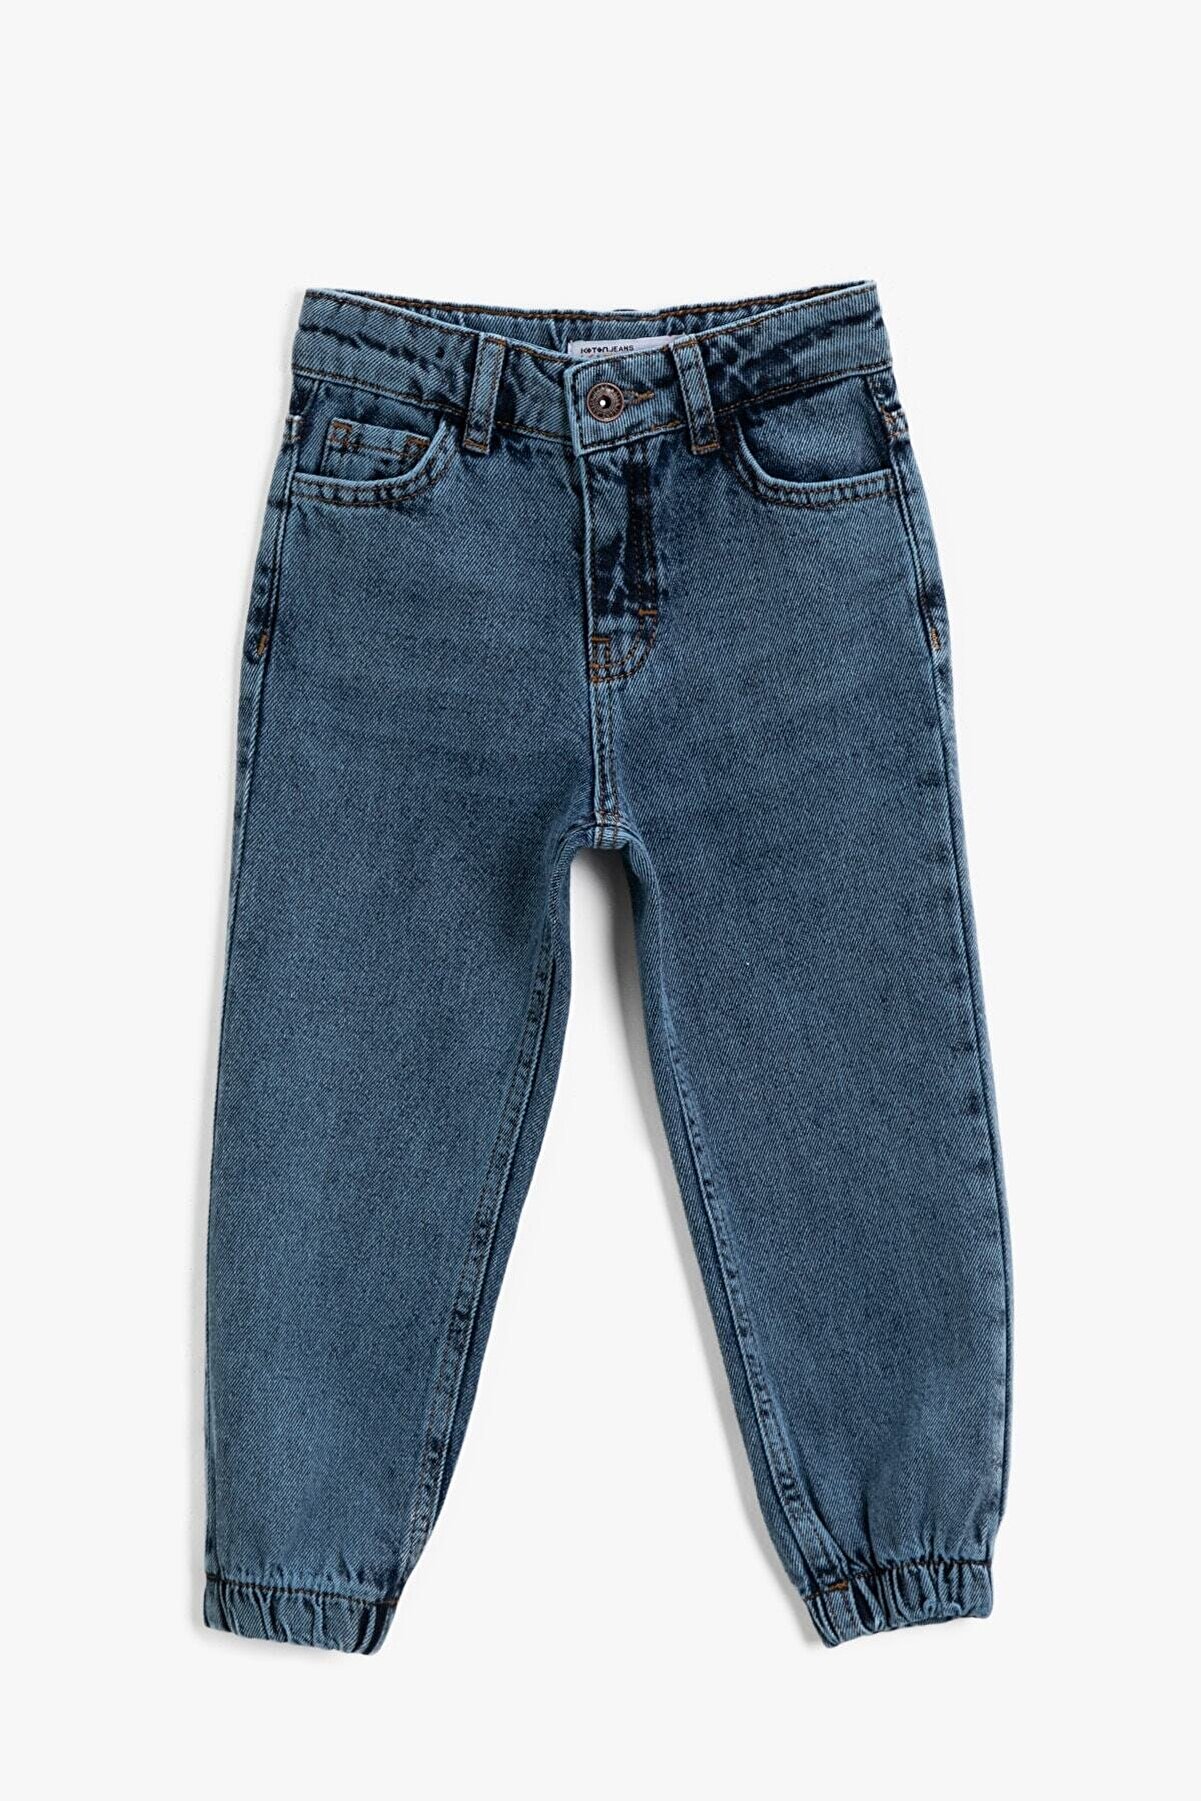 Koton Kız Çocuk Orta Indigo Jeans 2KKG47212OD